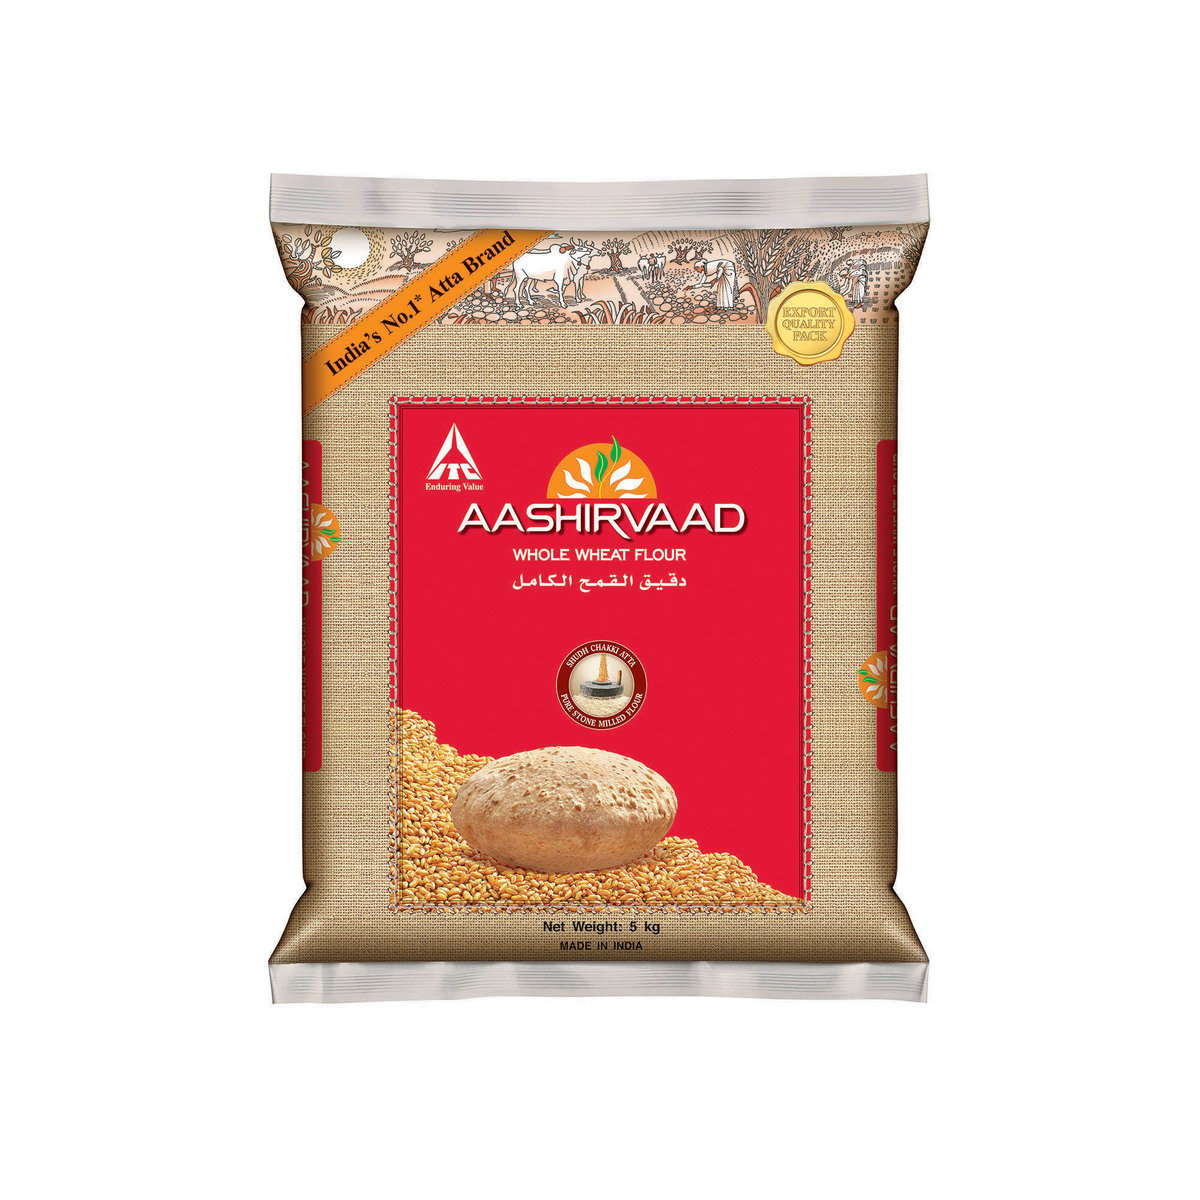 Aashirvaad Whole Wheat Flour Shudh Chakki Atta 5kg